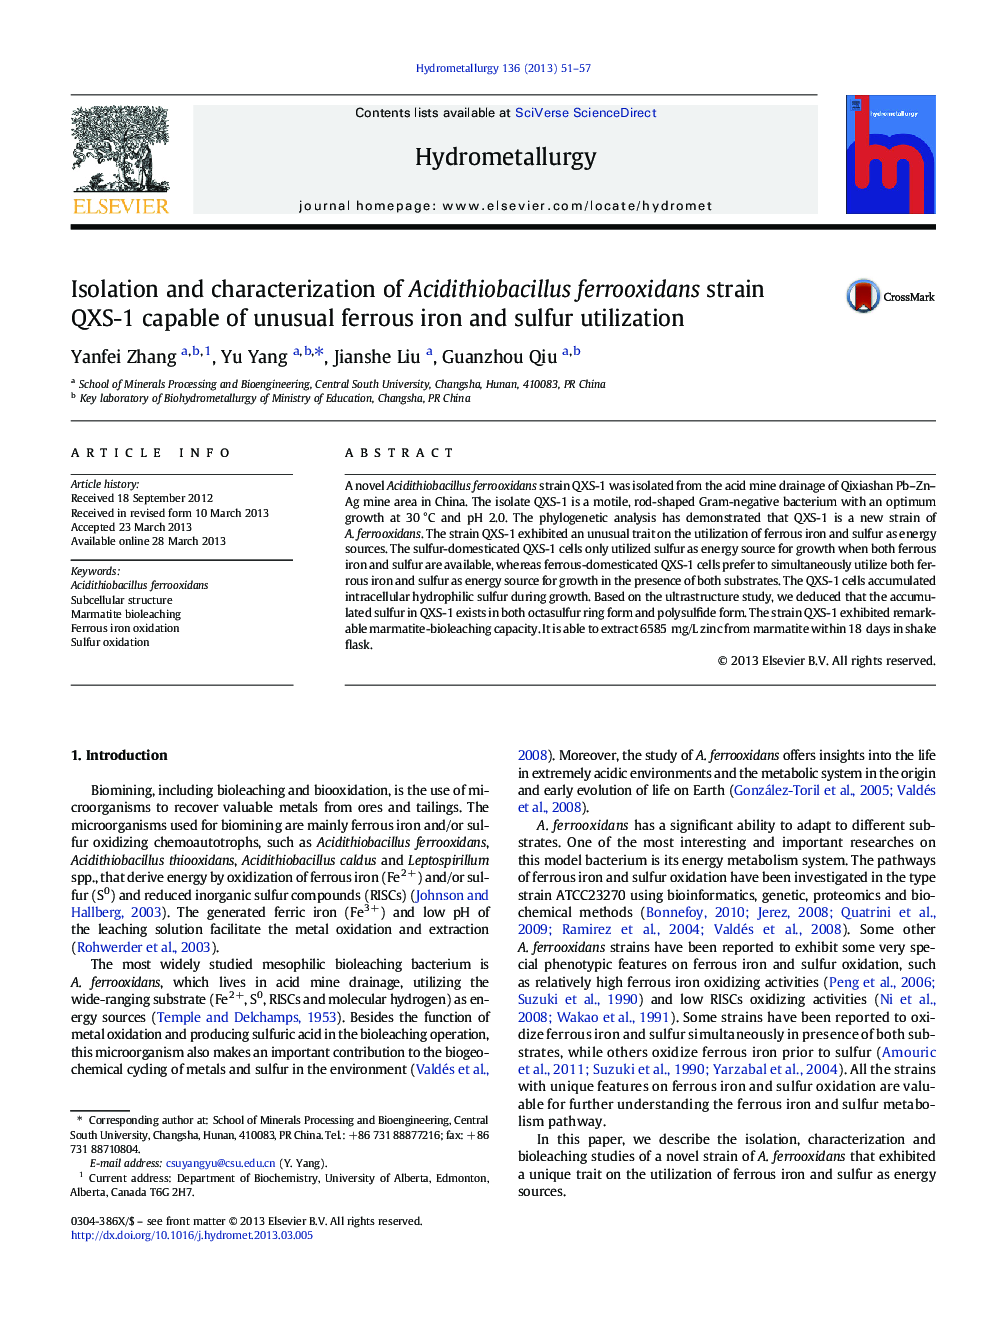 Isolation and characterization of Acidithiobacillus ferrooxidans strain QXS-1 capable of unusual ferrous iron and sulfur utilization